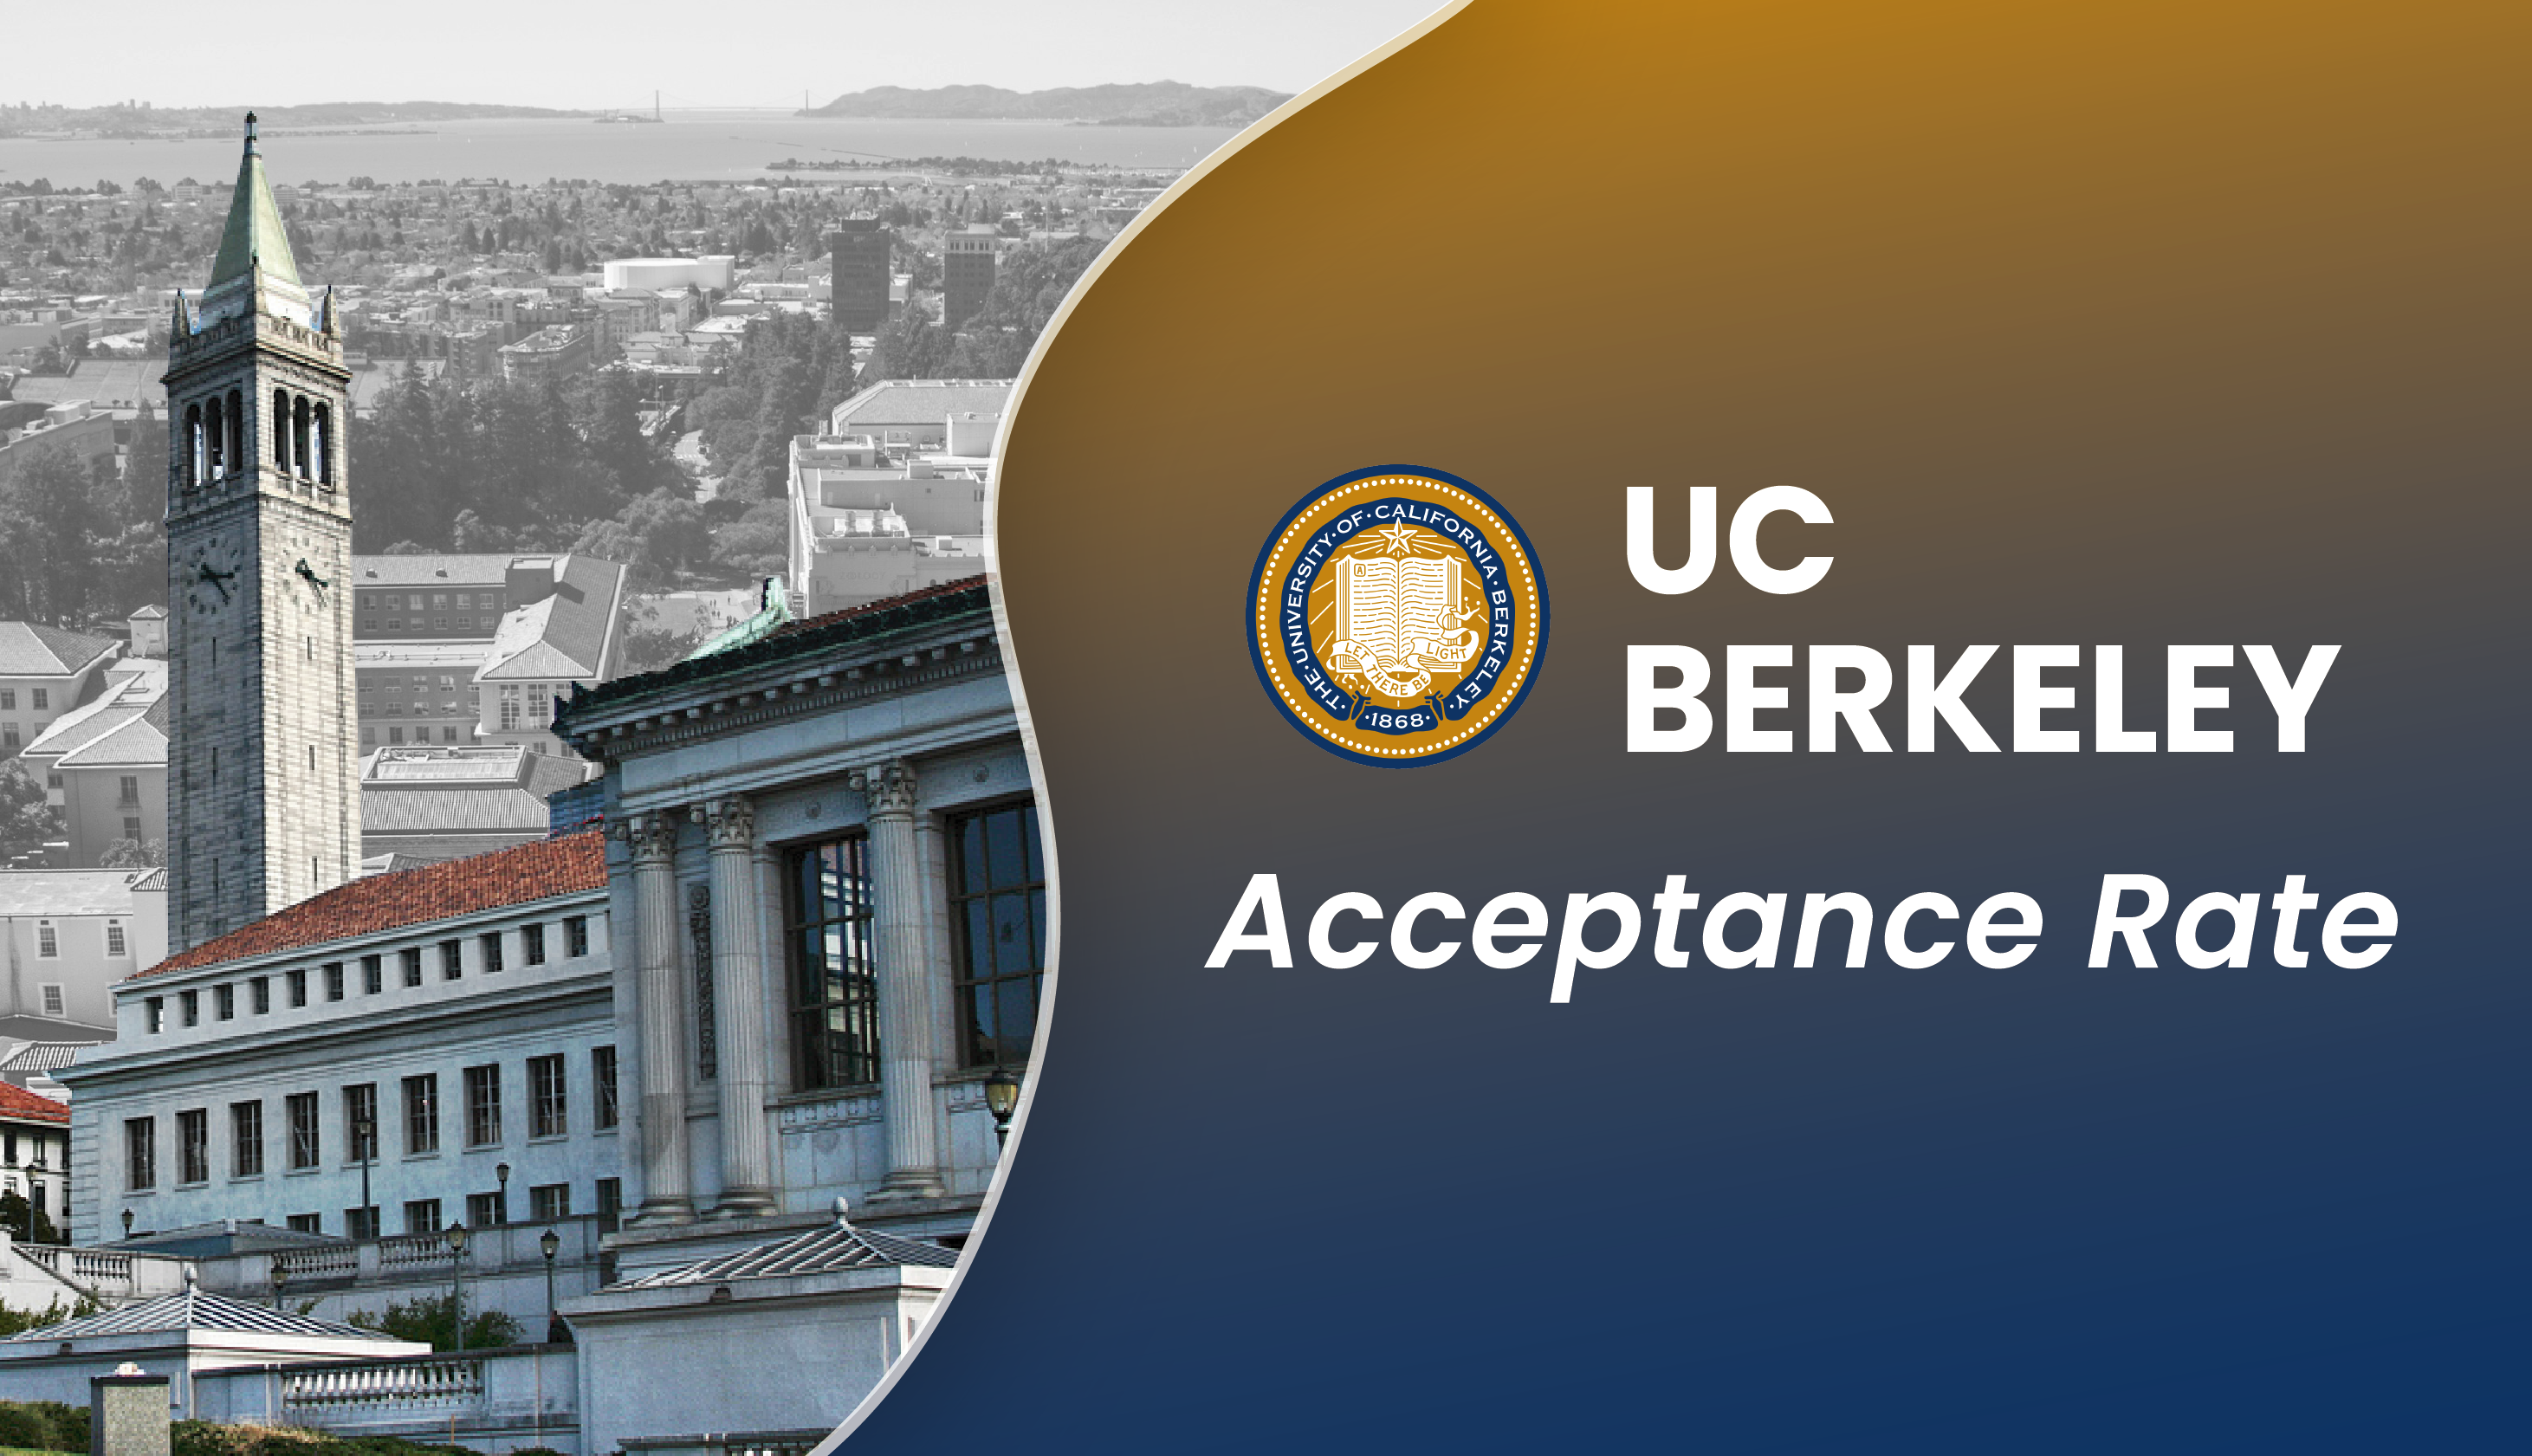 uc berkeley math phd acceptance rate